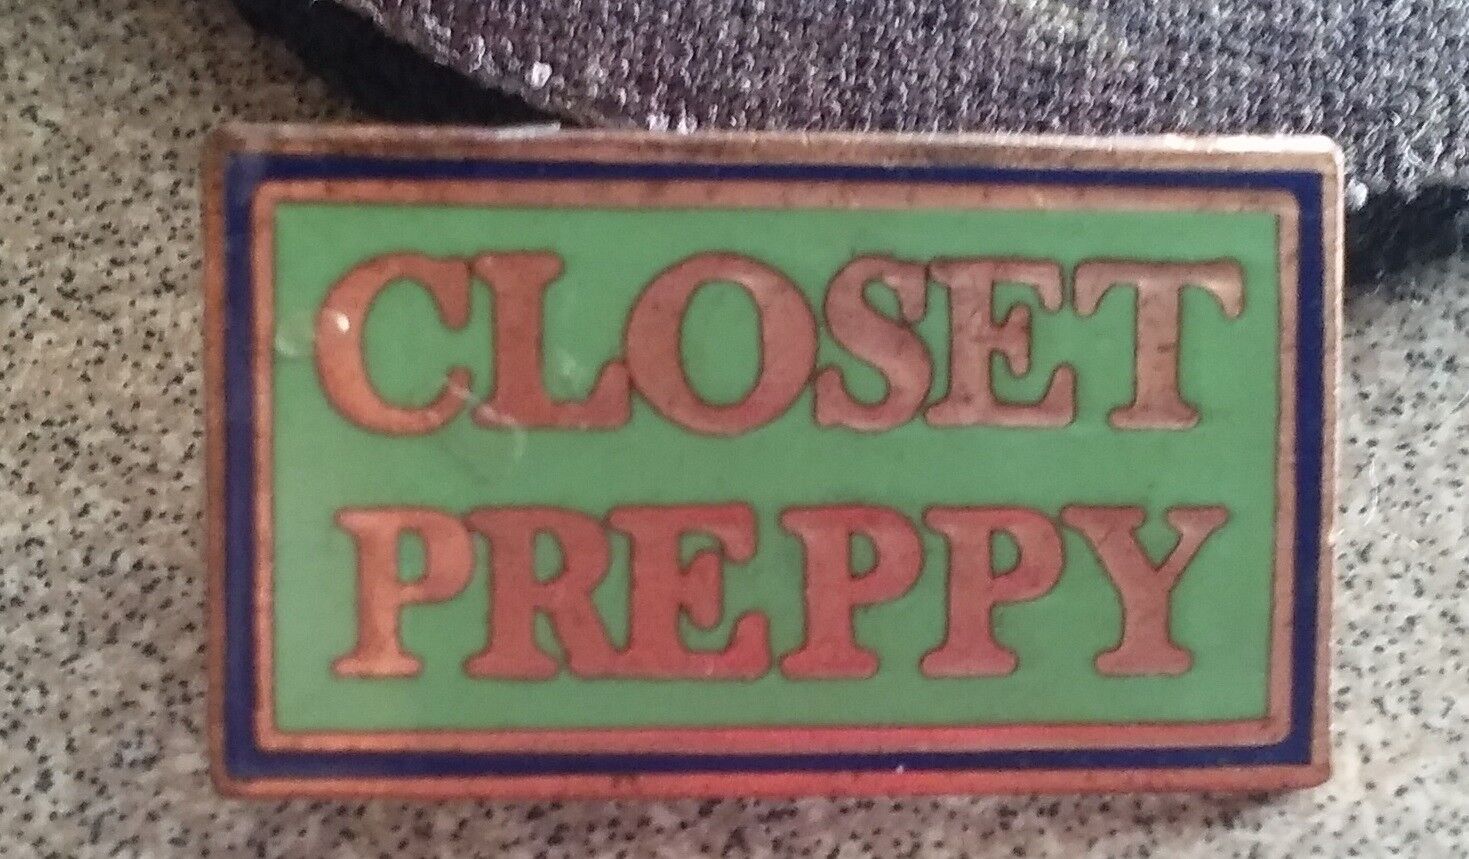 Closet Preppy pin badge